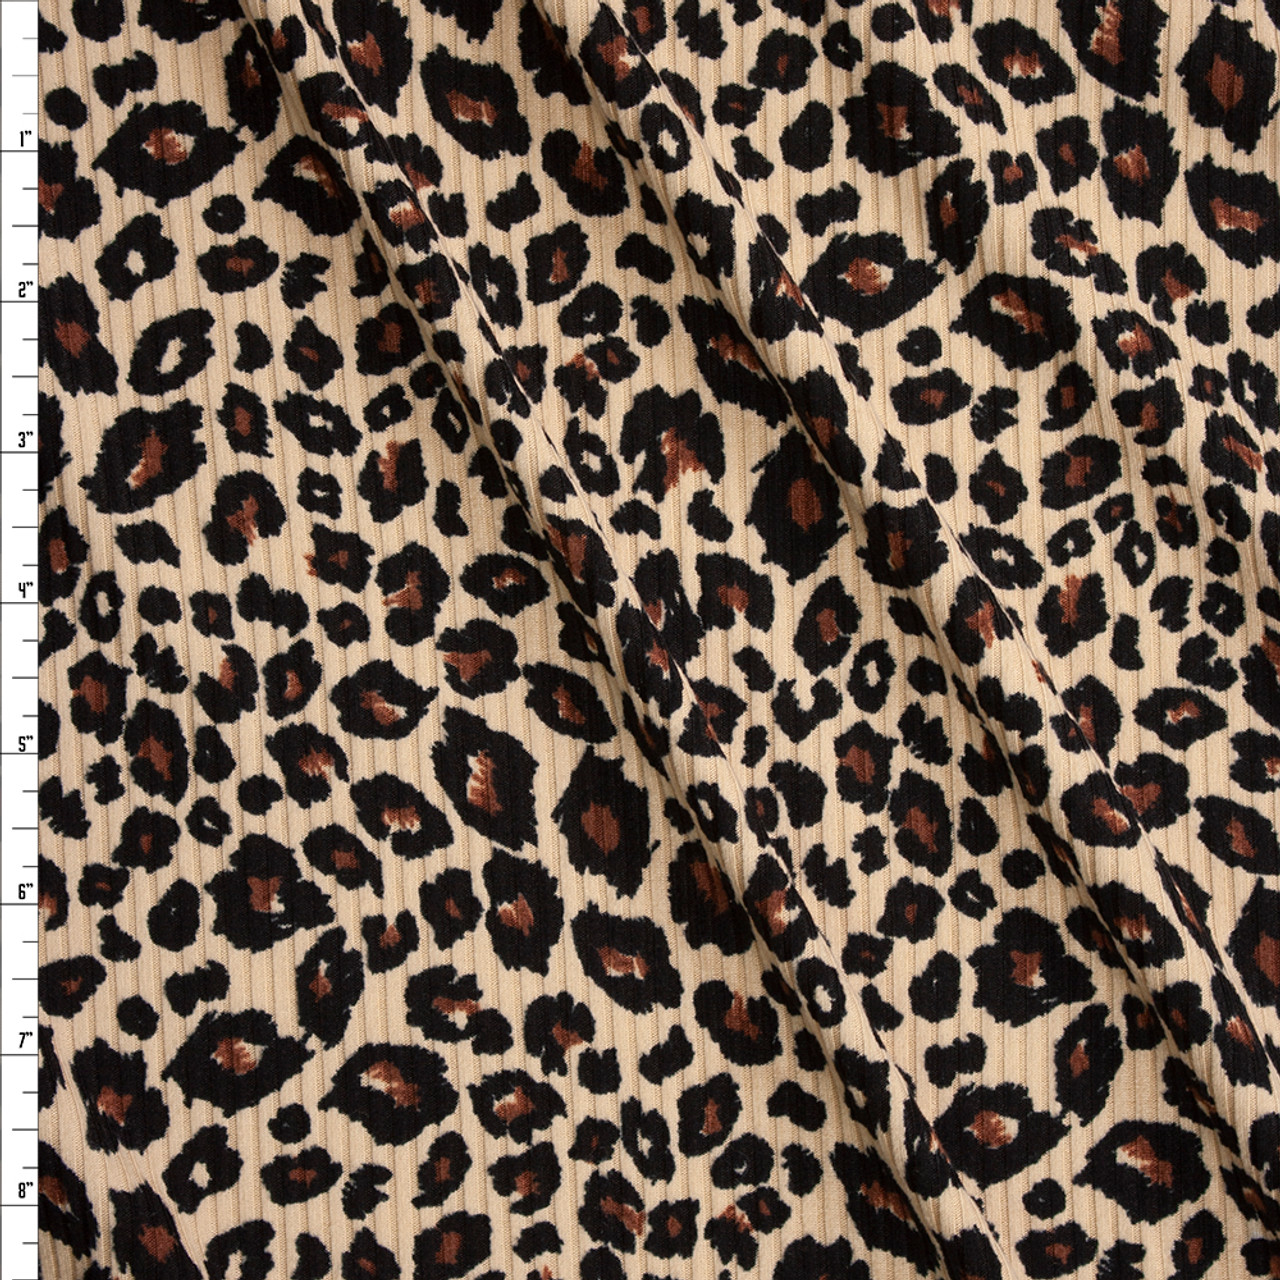 Cheetah Print Fabric by the Yard